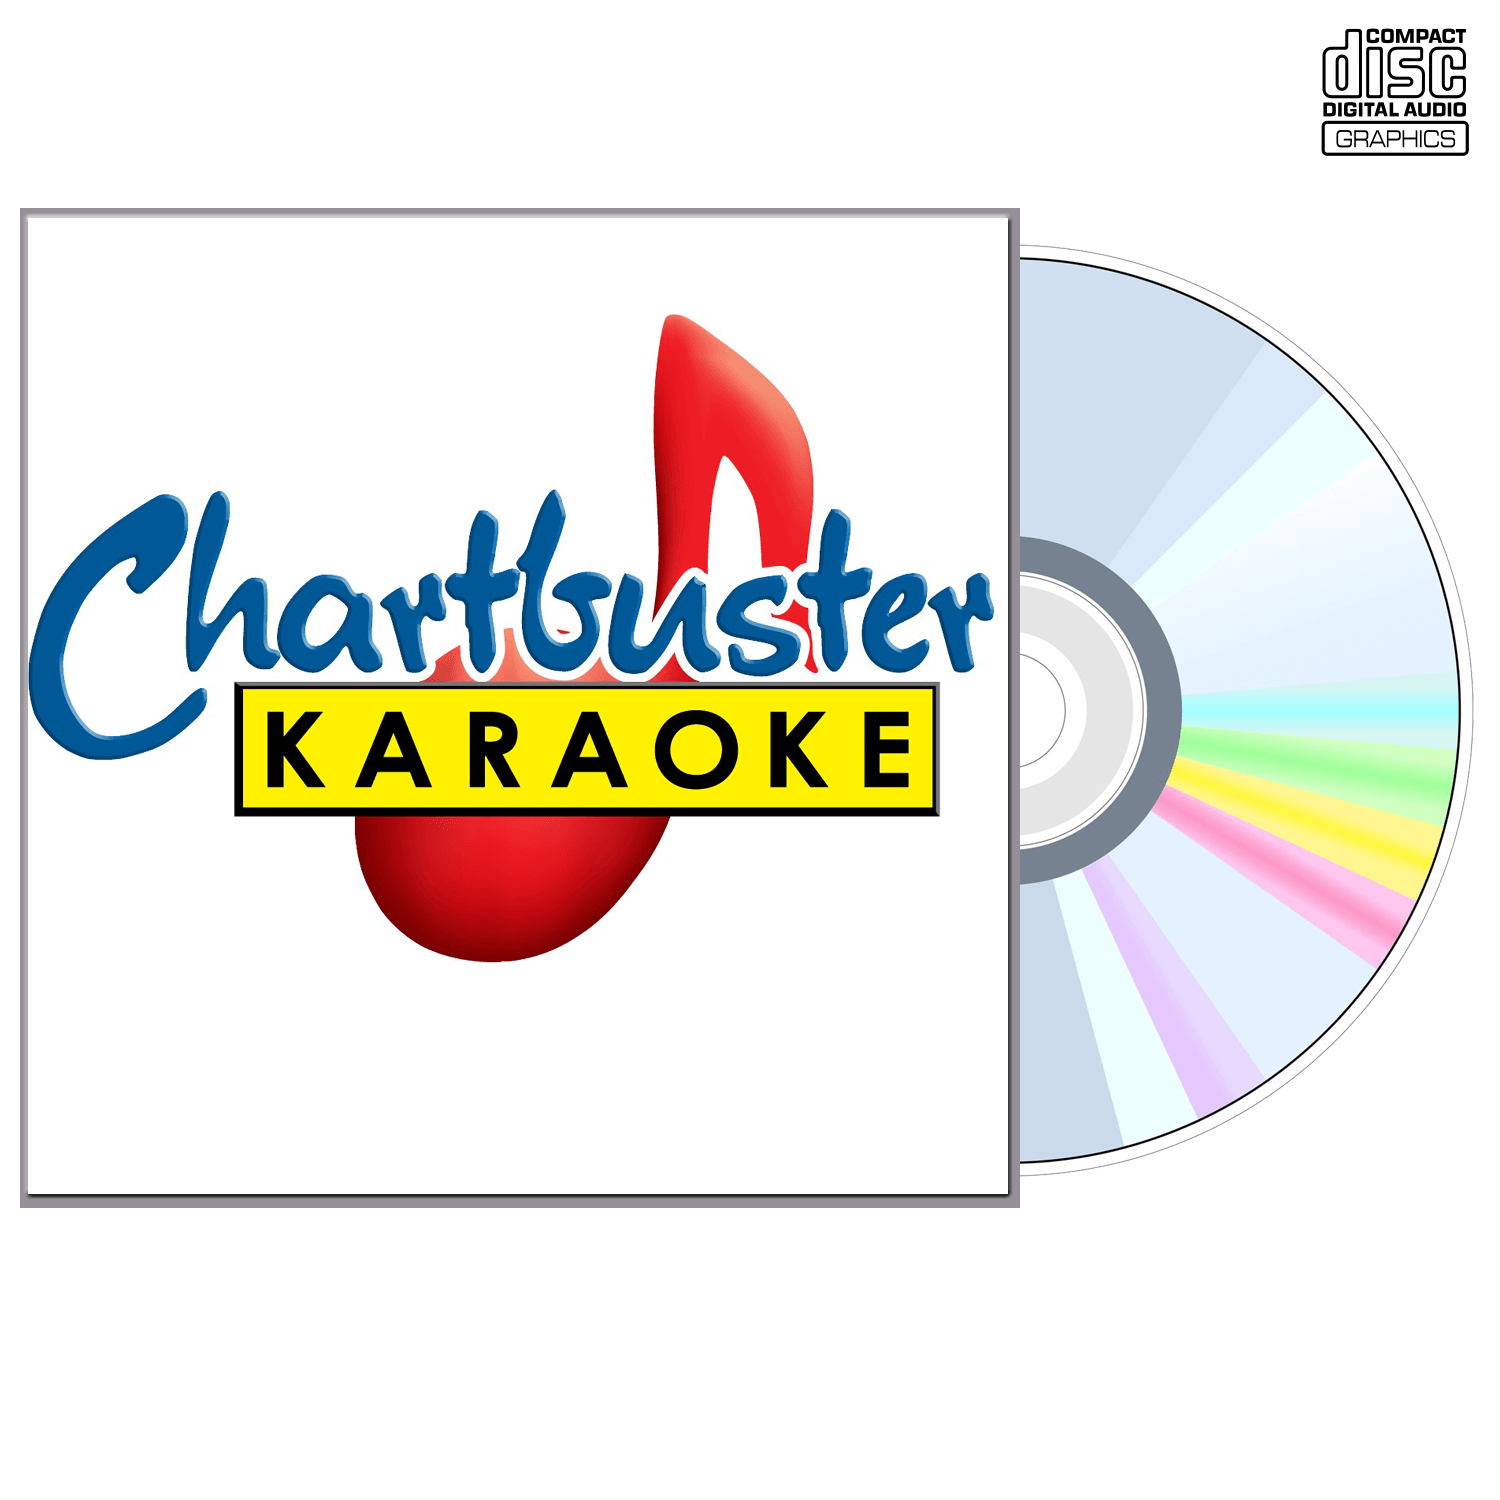 Best Of Eddie Rabbitt - CD+G - Chartbuster Karaoke - Karaoke Home Entertainment